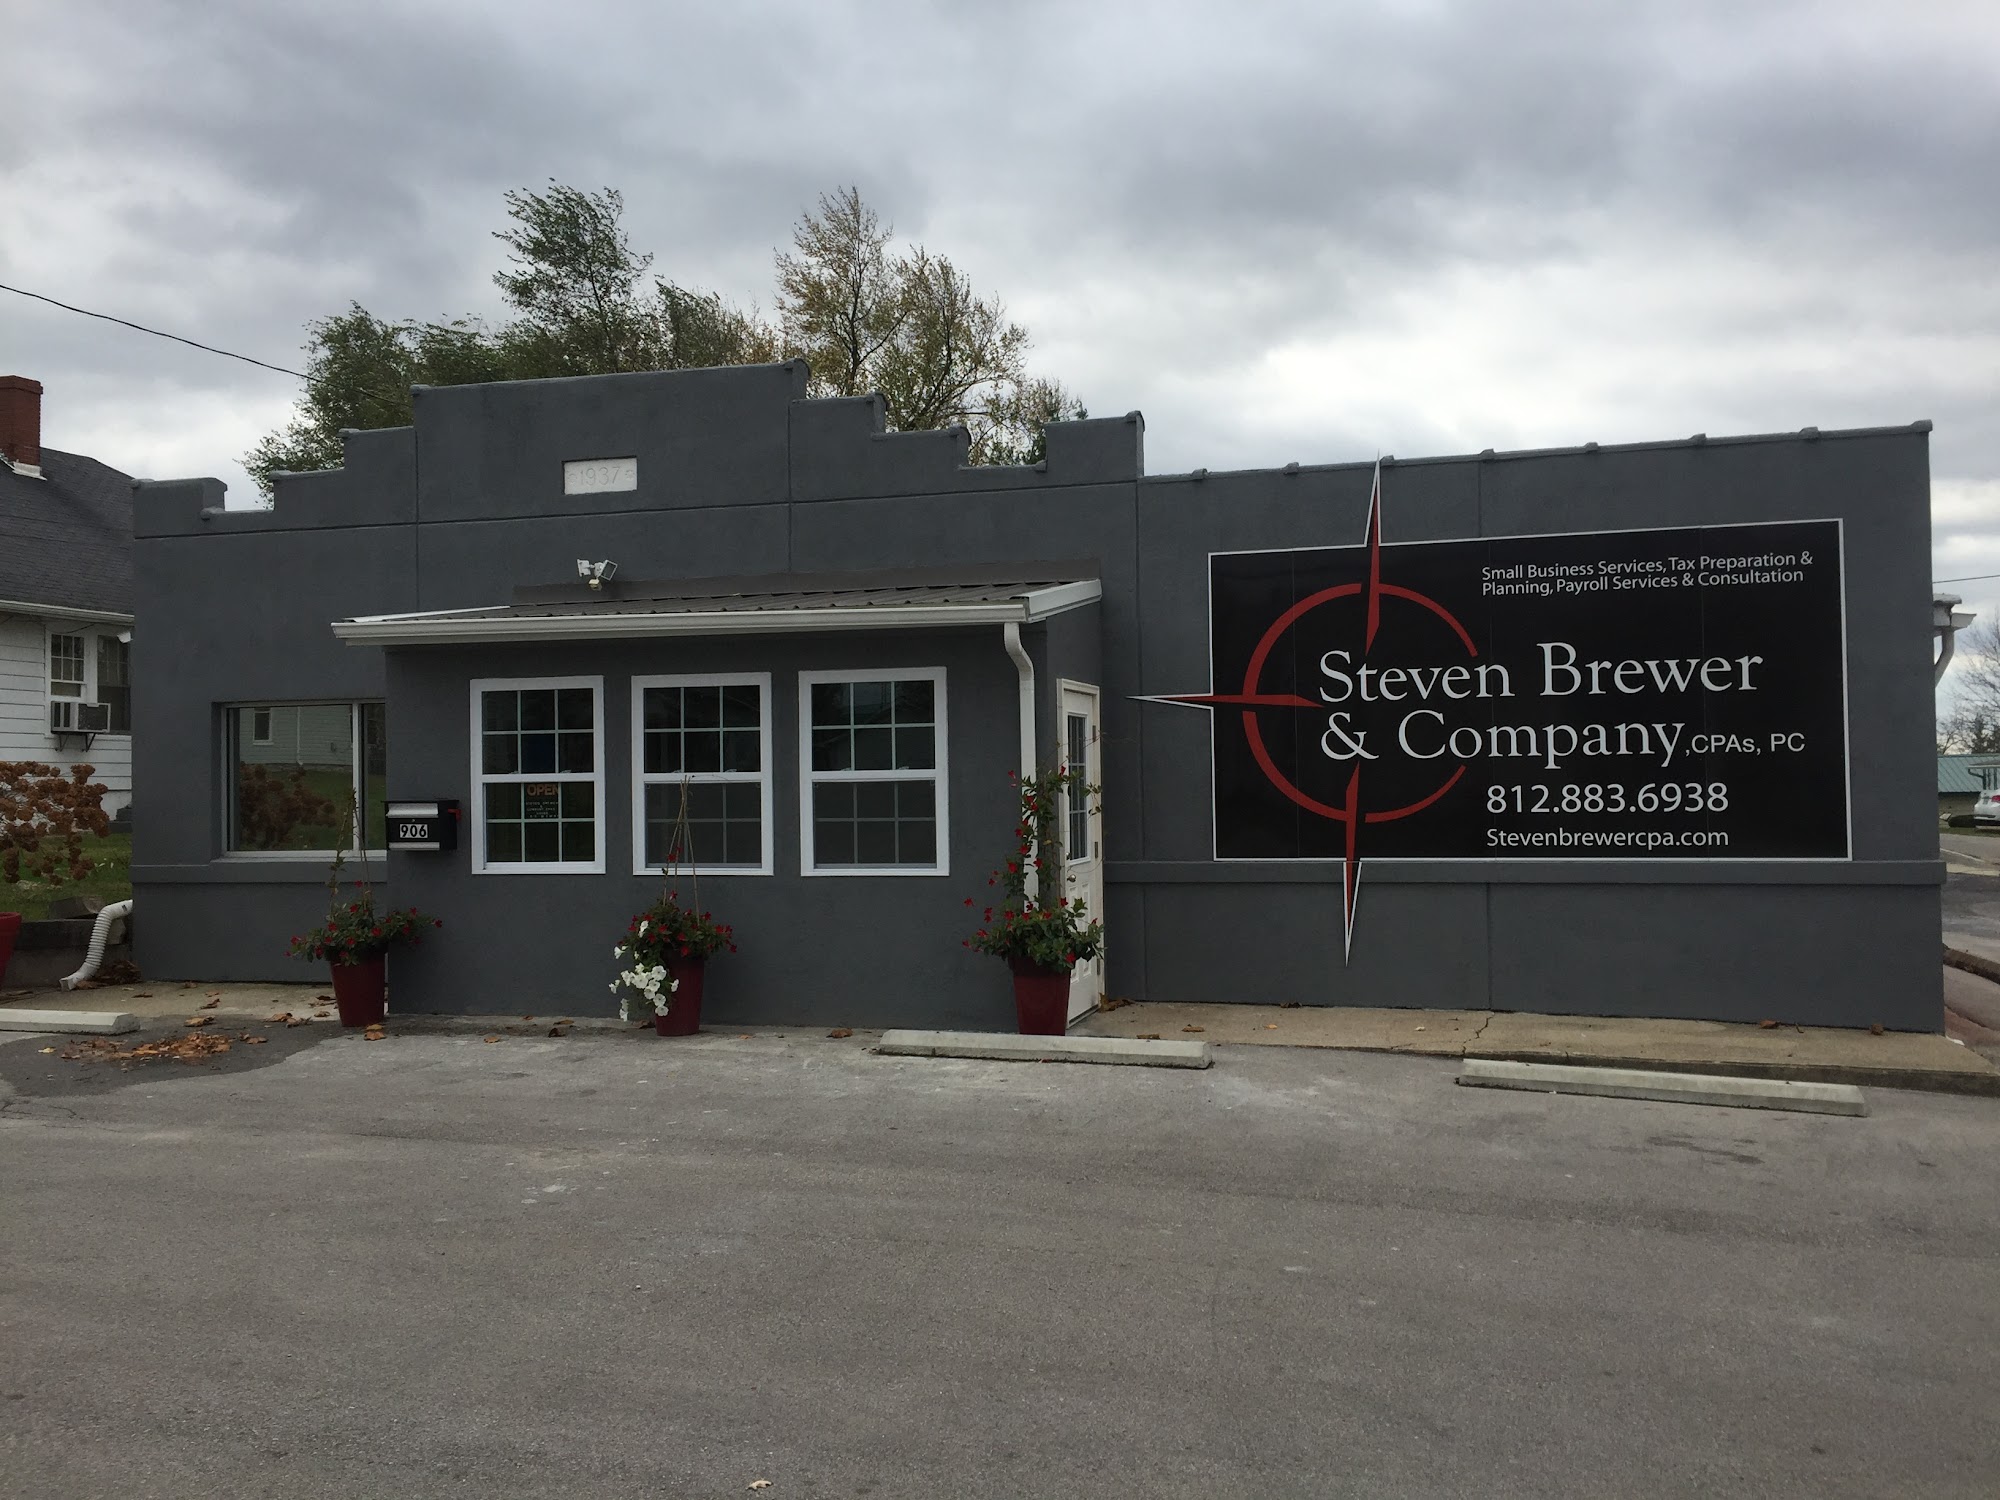 Steven Brewer & Company, CPAs, PC 906 W Mulberry St, Salem Indiana 47167